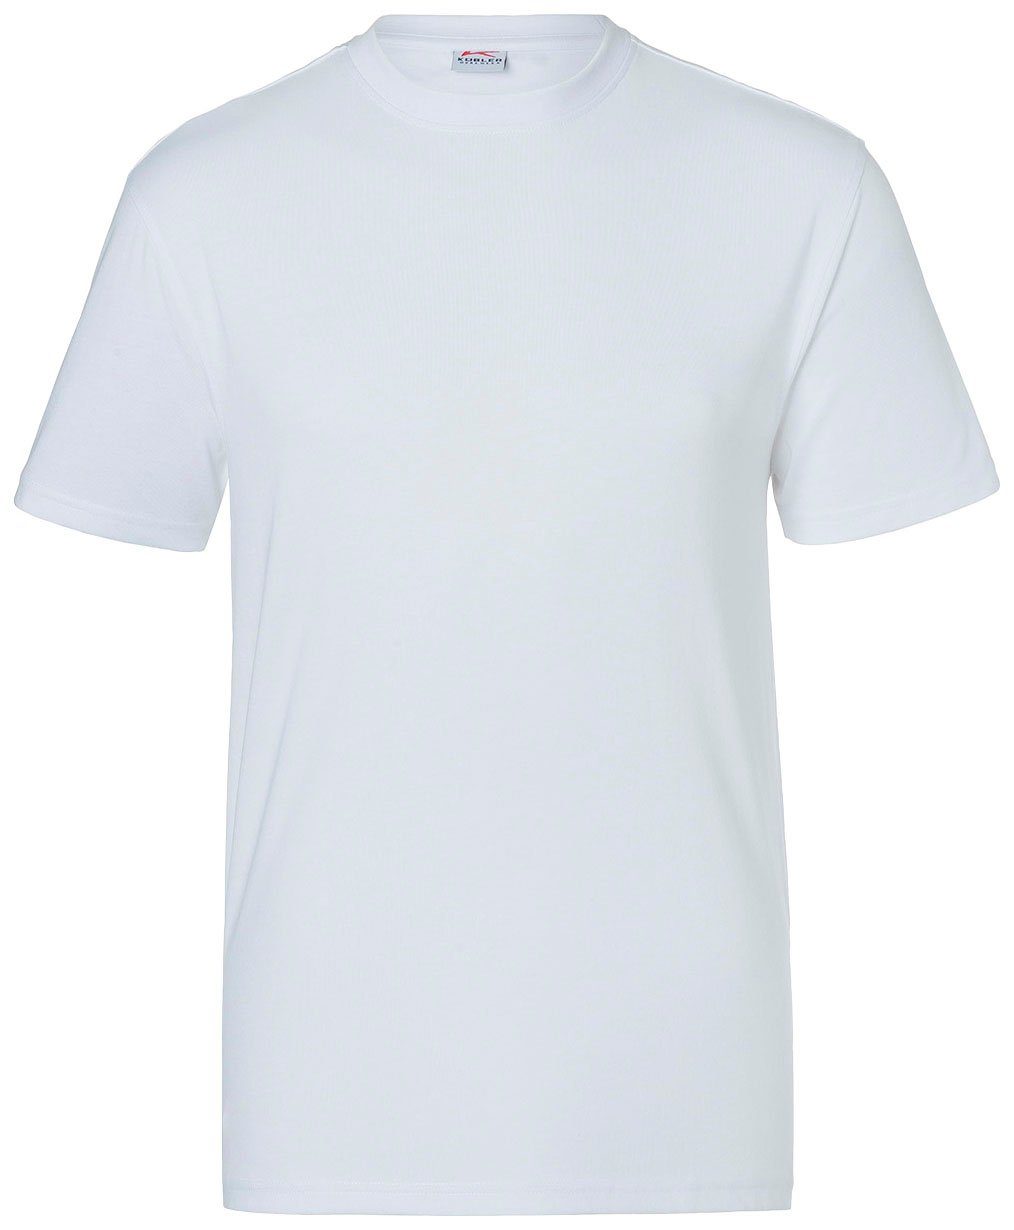 Kübler T-Shirt (Set, 5-tlg) Größe: S - XXL weiß